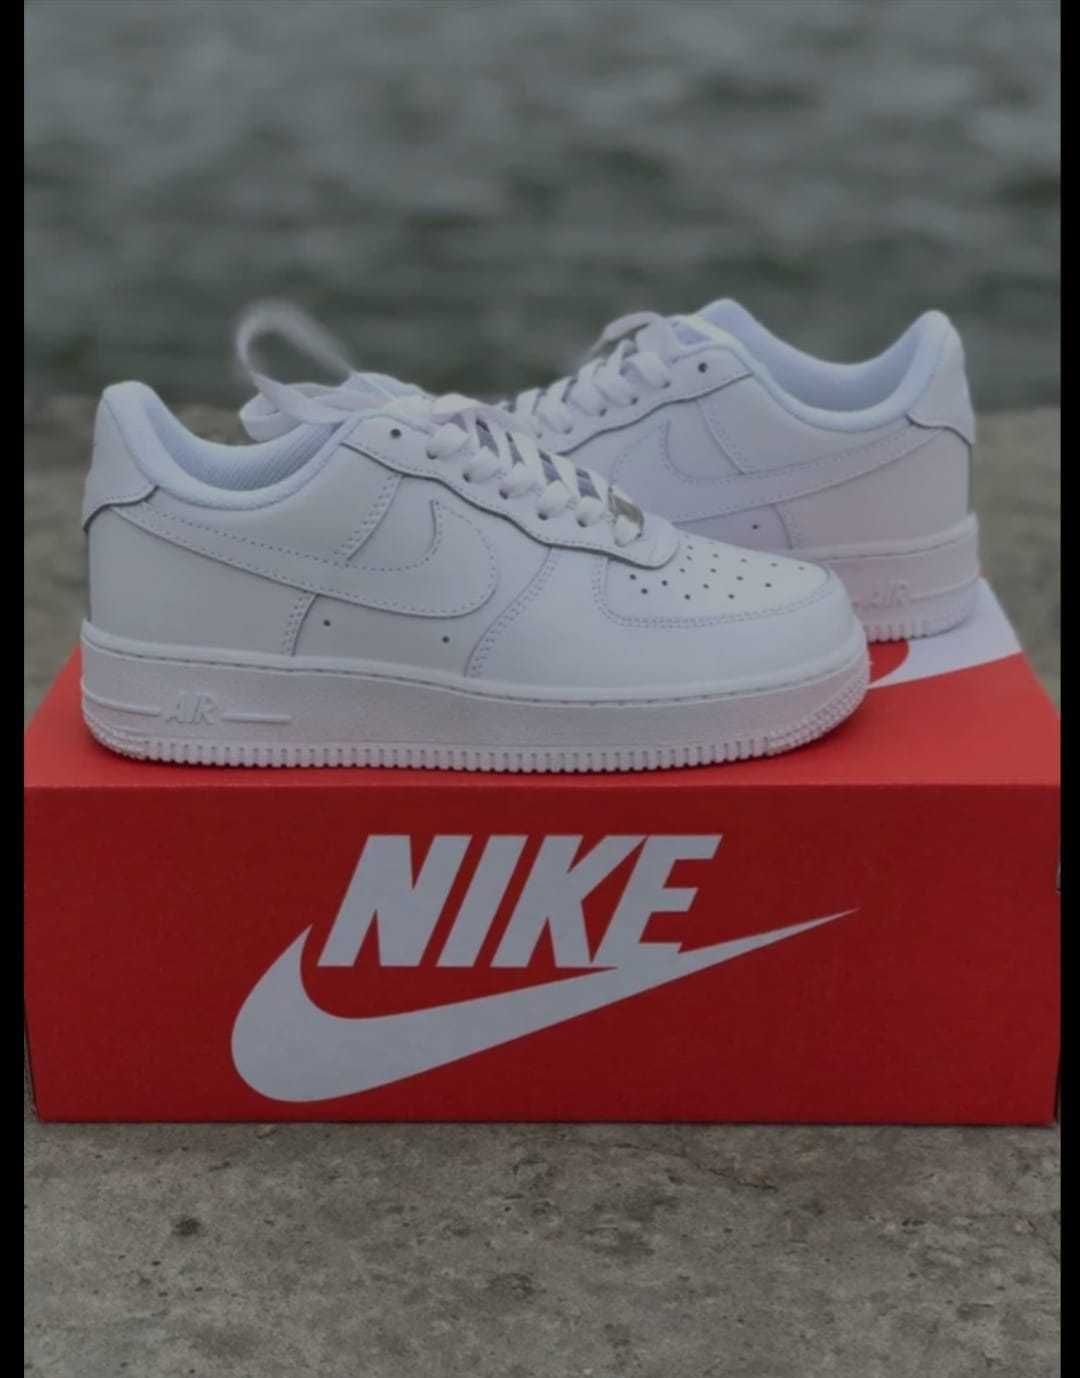 Adidasi Nike Air Force 1 low albi white dama si barbati